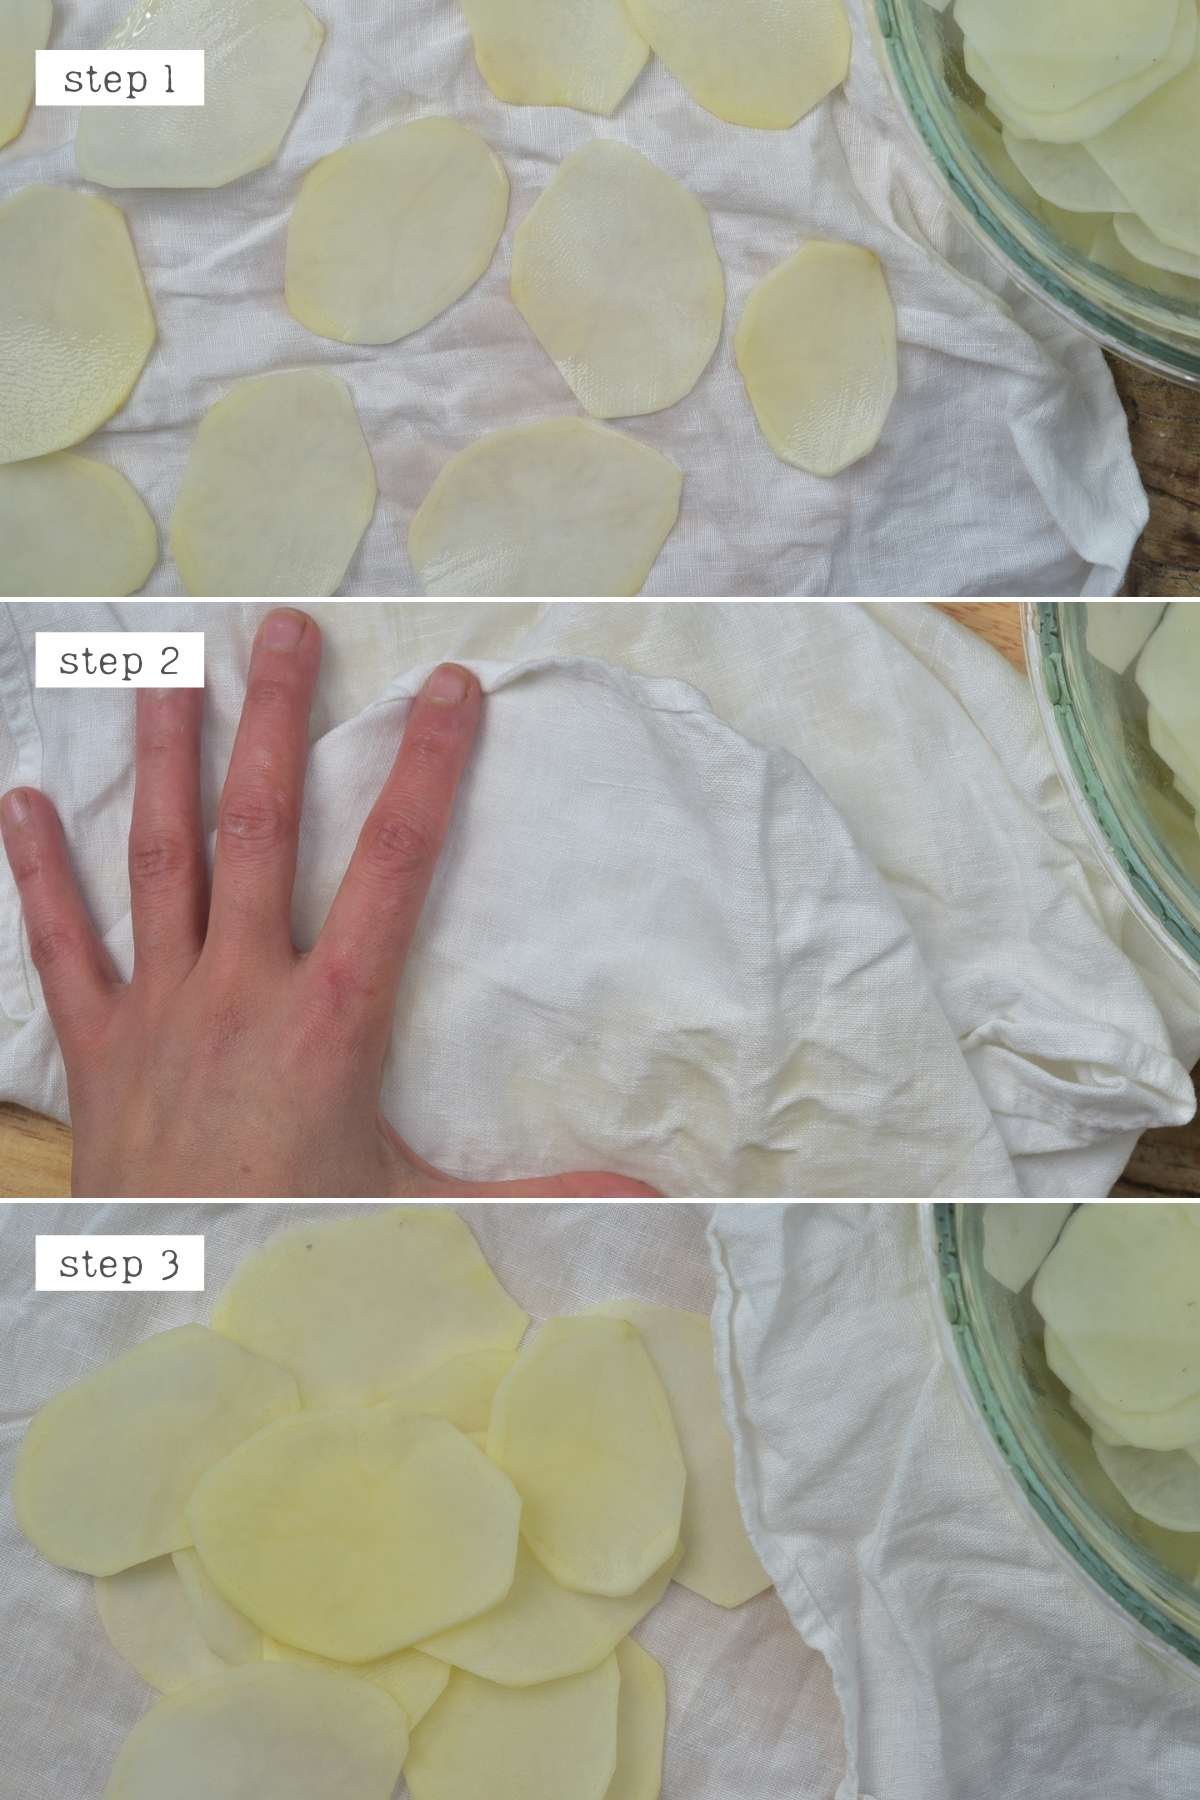 Steps for drying potato slices